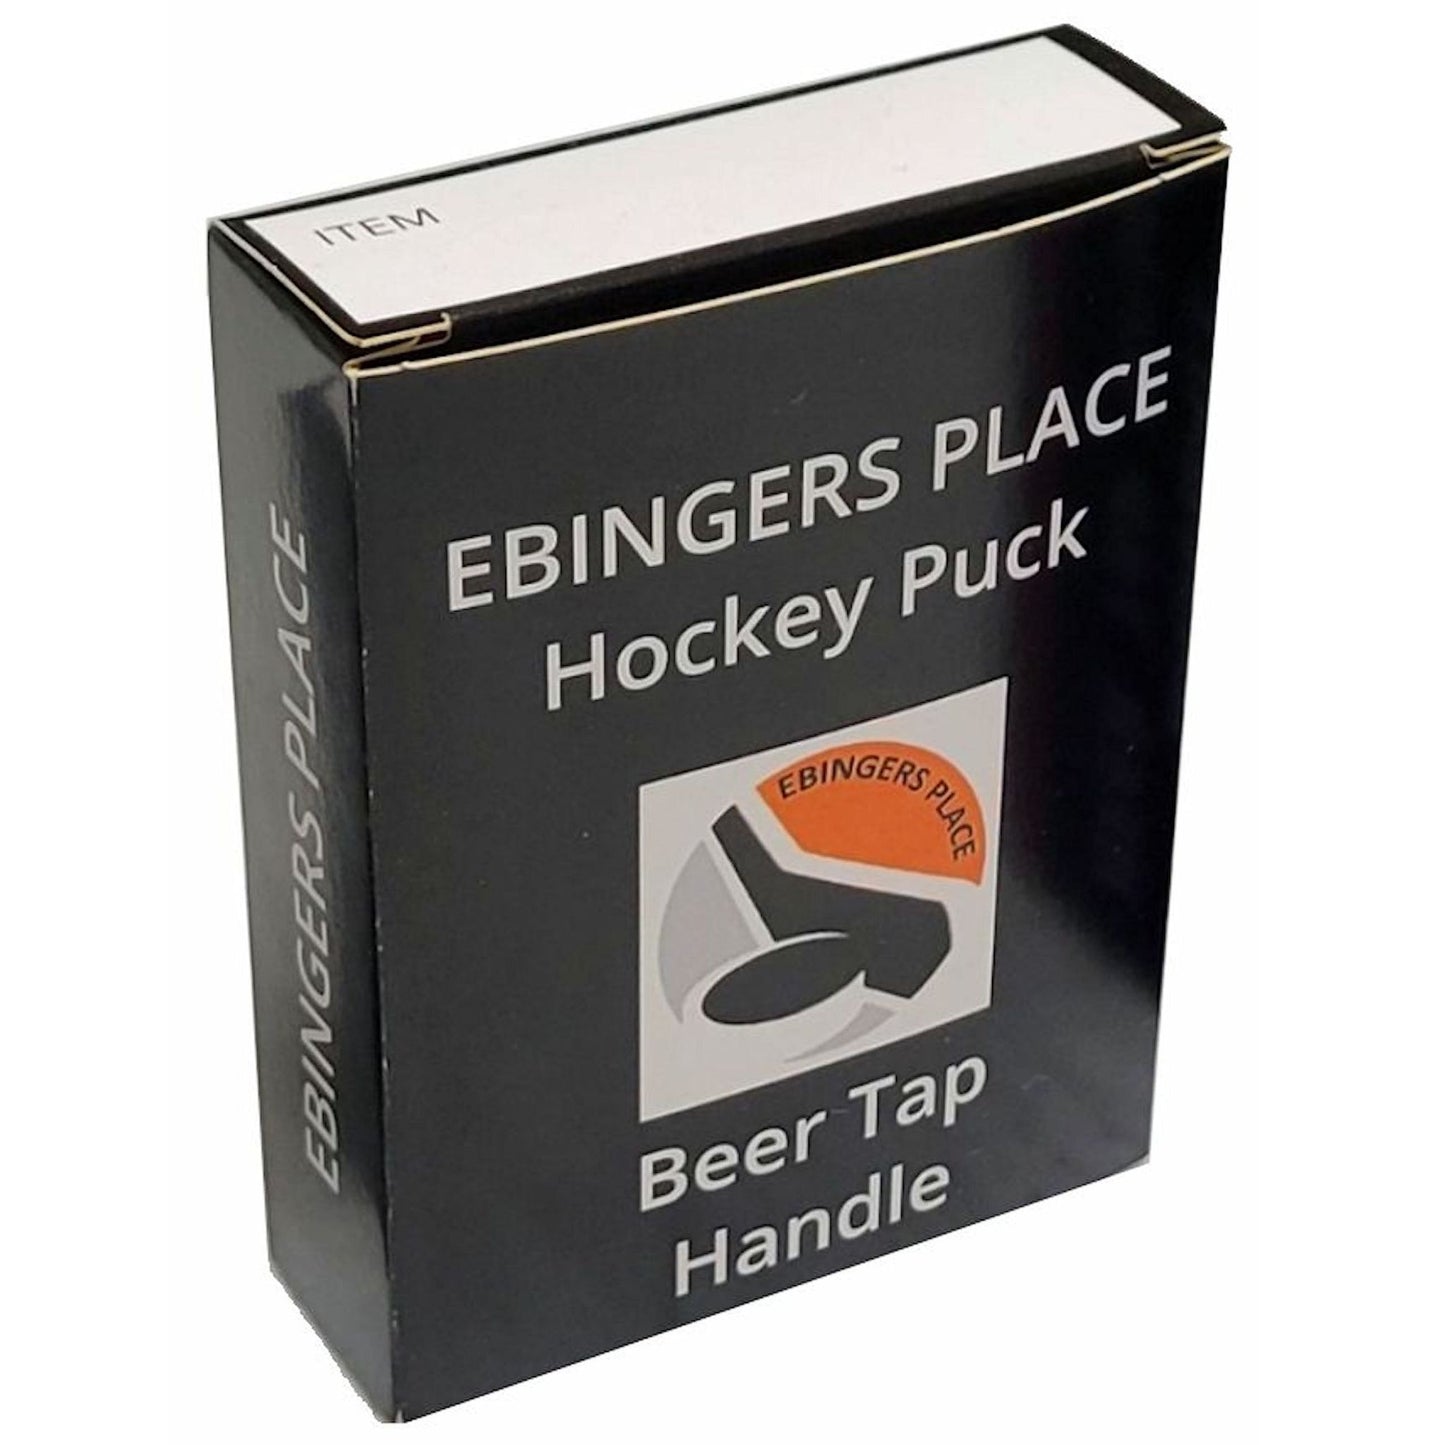 Canadian Flag Hockey Puck Beer Tap Handle